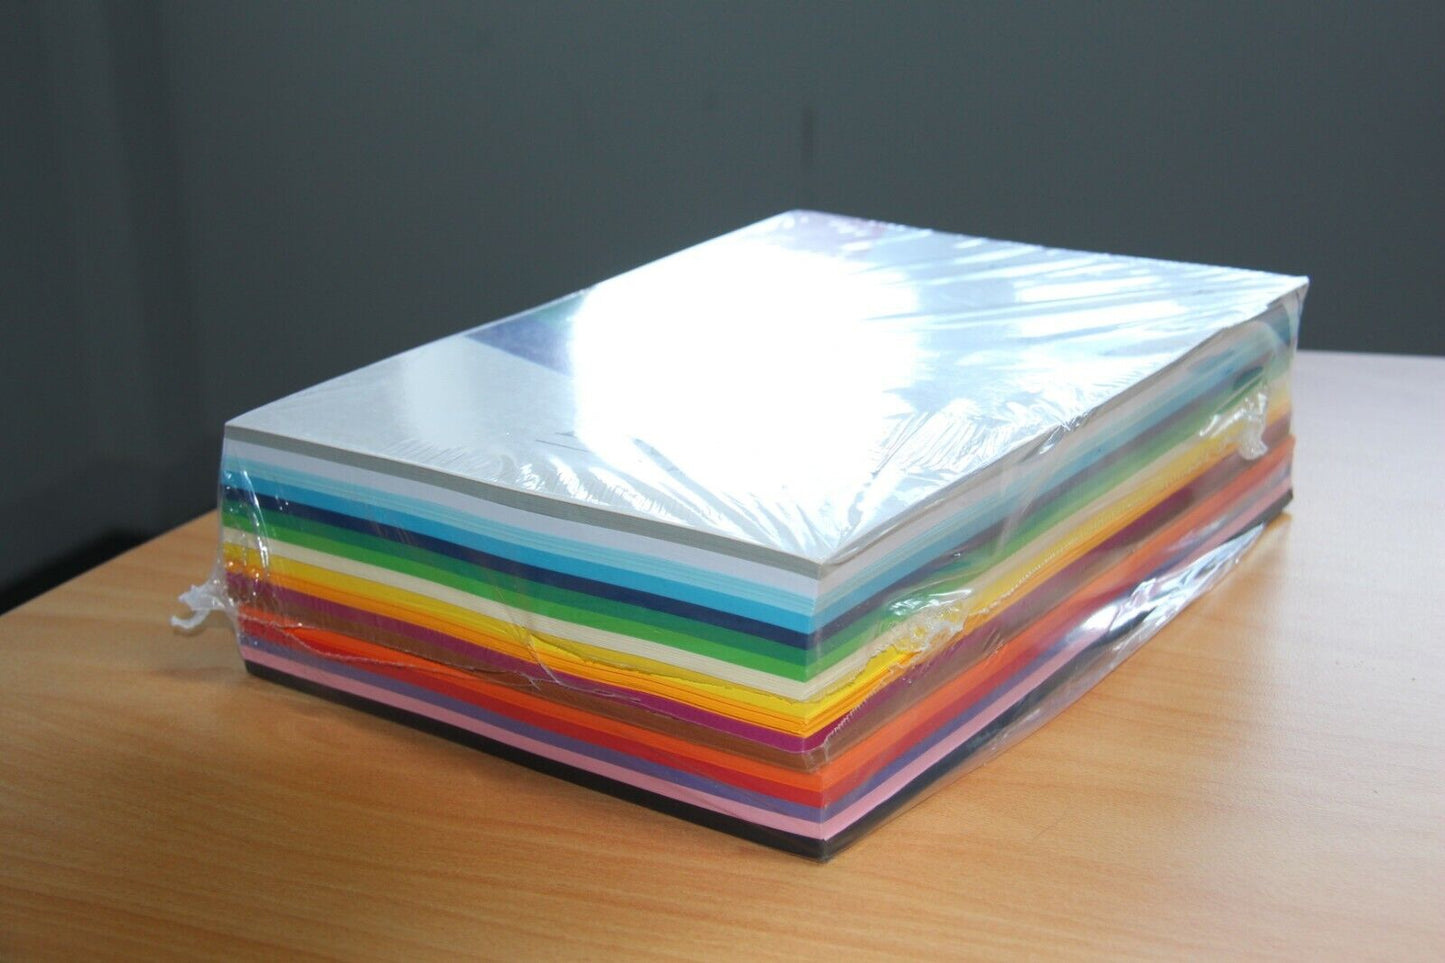 500 Sheets x 150GSM A4 Coloured Card Cardboard Paper - Premium Quality Au Made